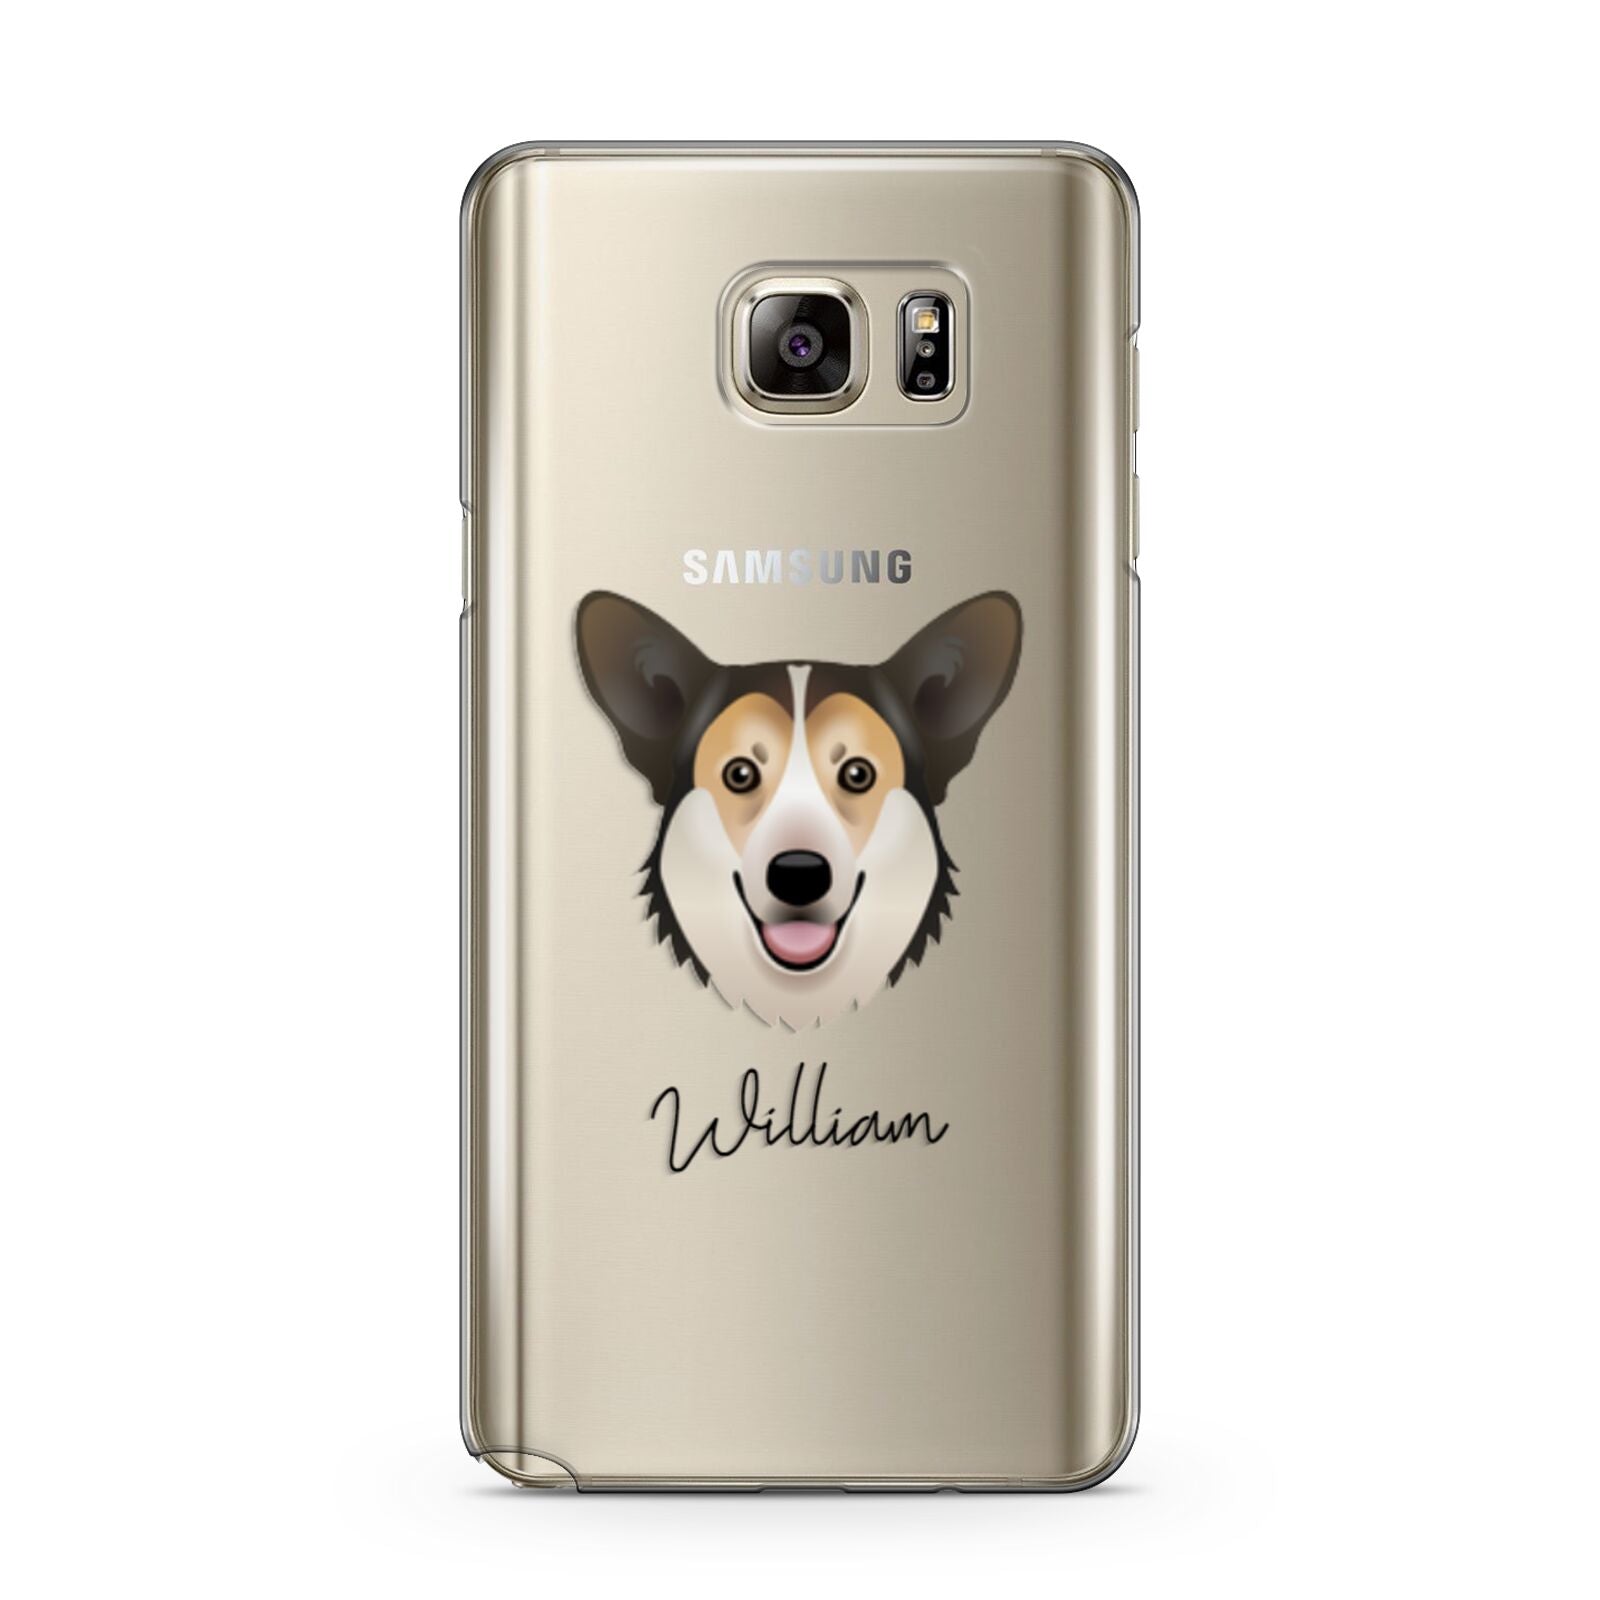 Pembroke Welsh Corgi Personalised Samsung Galaxy Note 5 Case